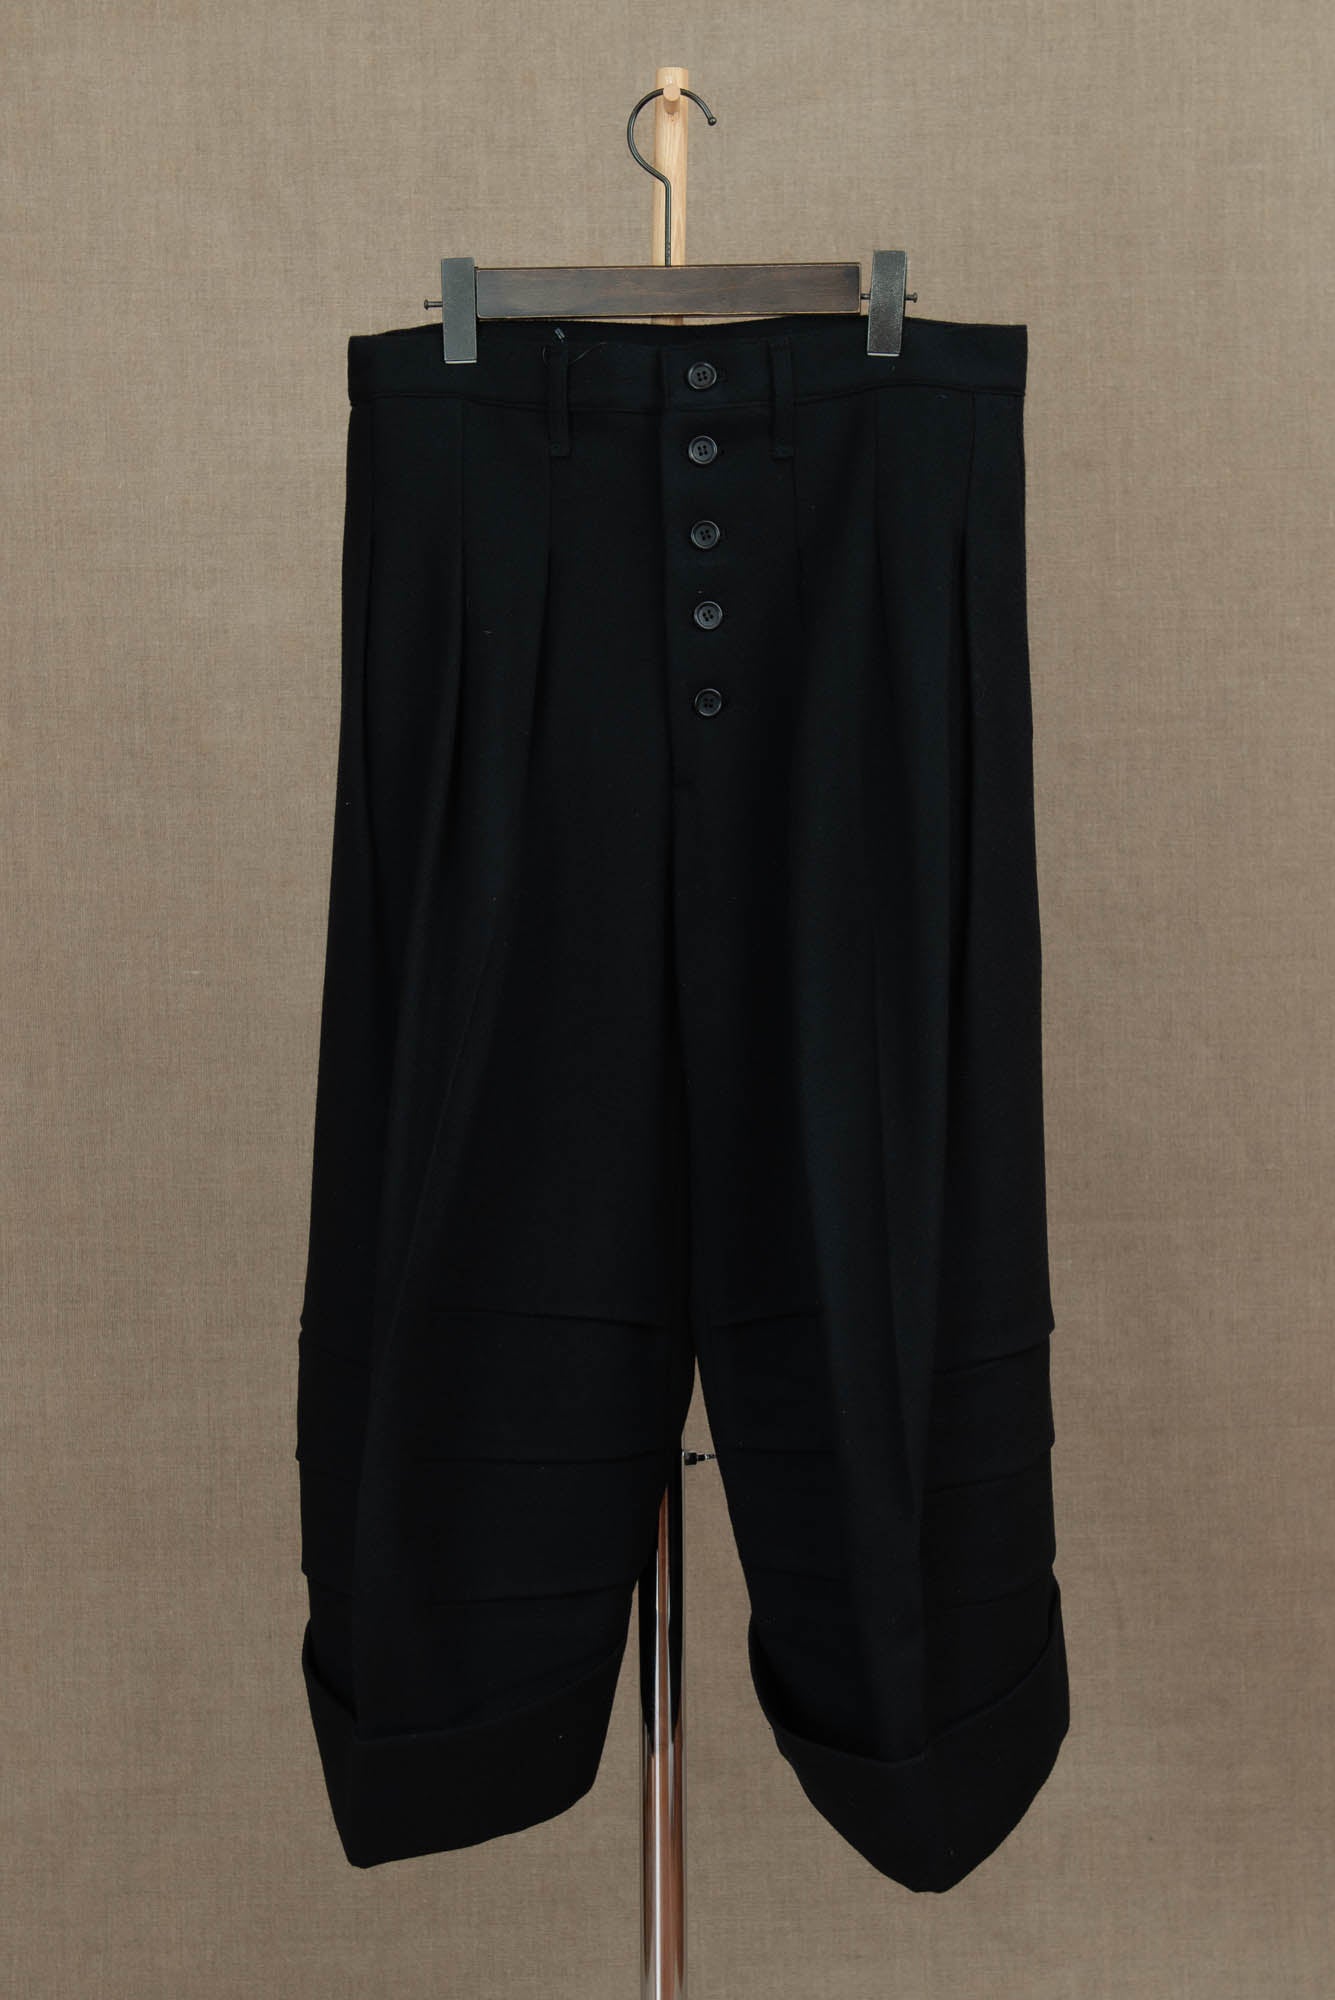 Christopher Nemeth - Trousers 9911- Denim- Pocket Rope Print- Indigo  Available on our online store #christophernemeth #nemeth